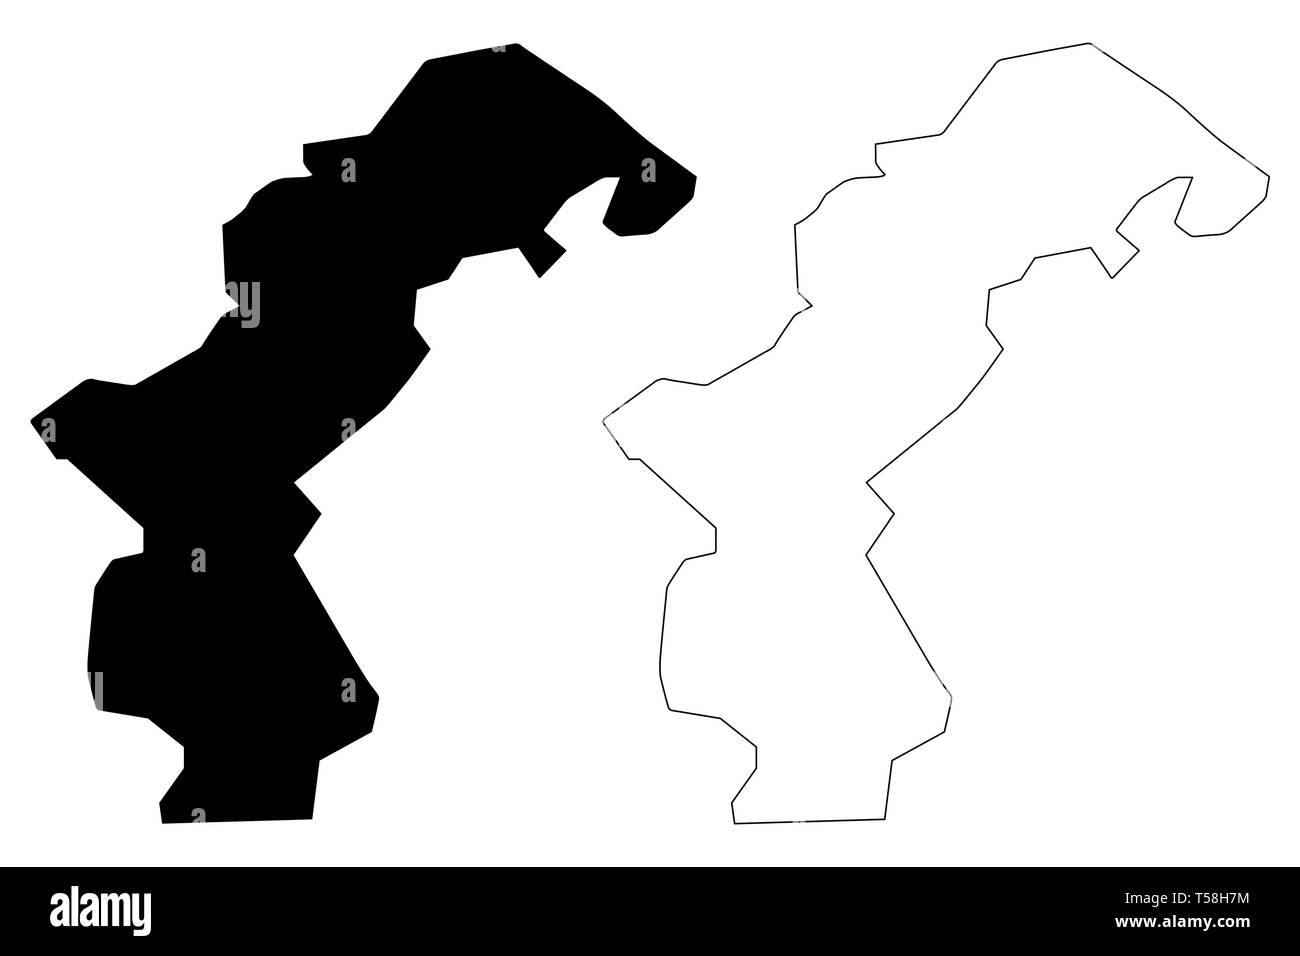 Amanat Al Asimah Governorate (Governorates of Yemen, Republic of Yemen) map vector illustration, scribble sketch Sanaa or Sana map Stock Vector